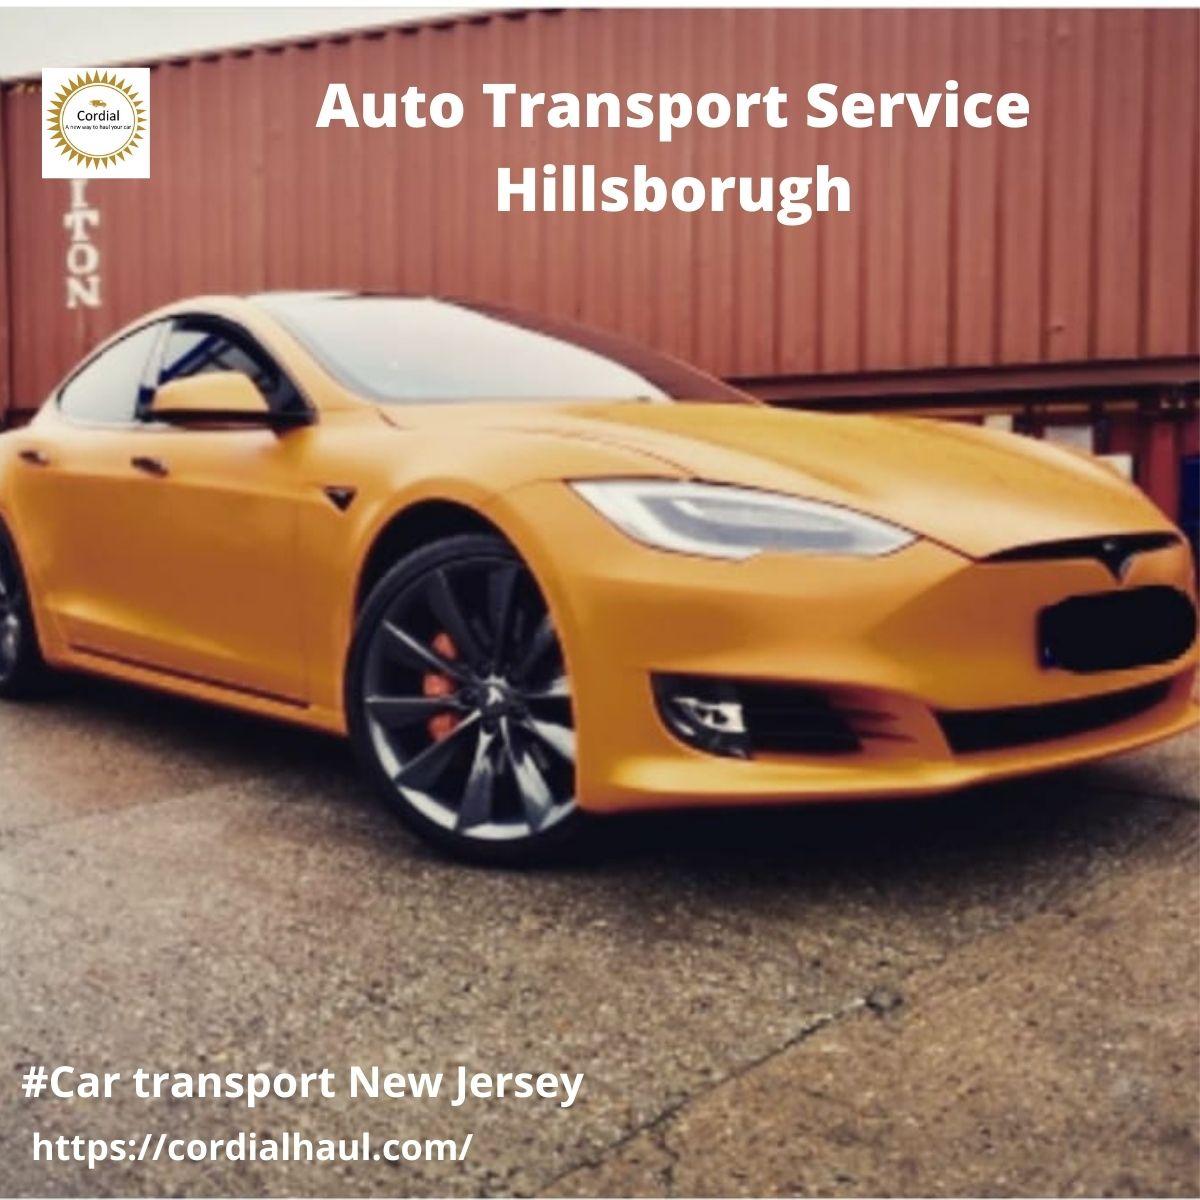 Auto Transport Cars Hillsborough Service